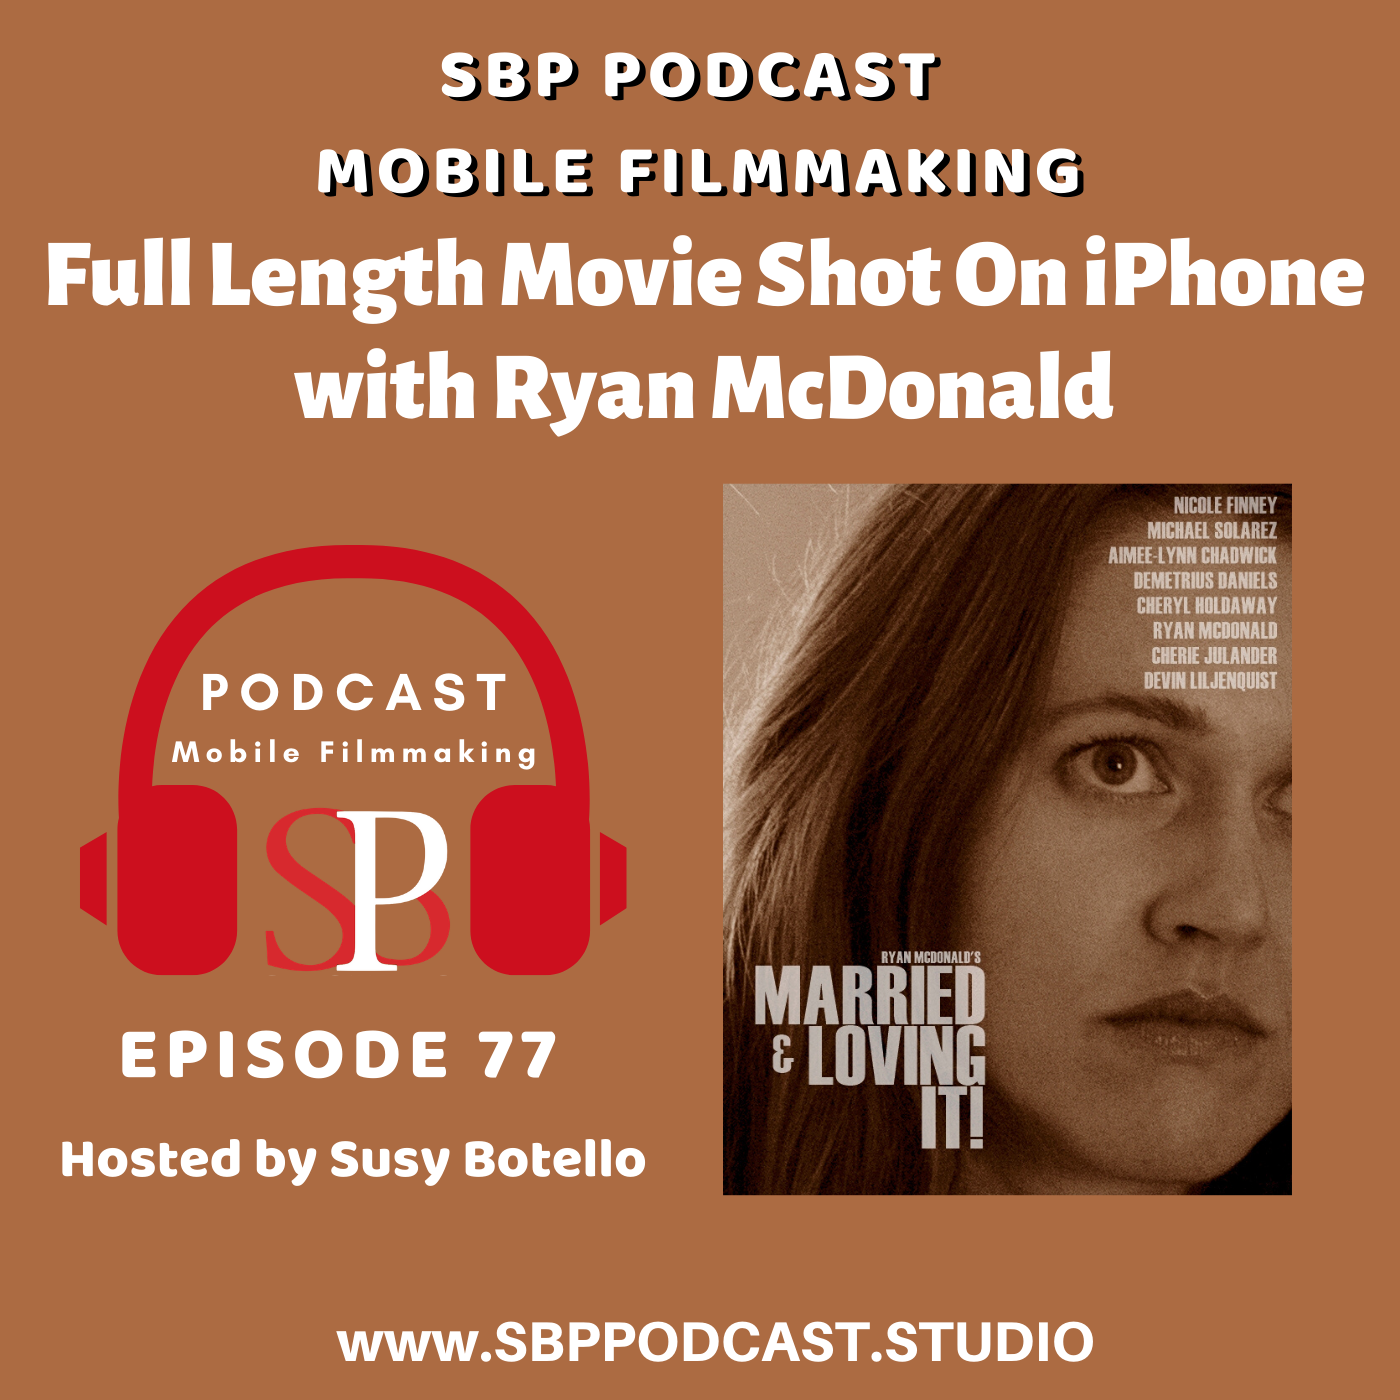 Full Length Movie Shot On iPhone with Ryan McDonald Image